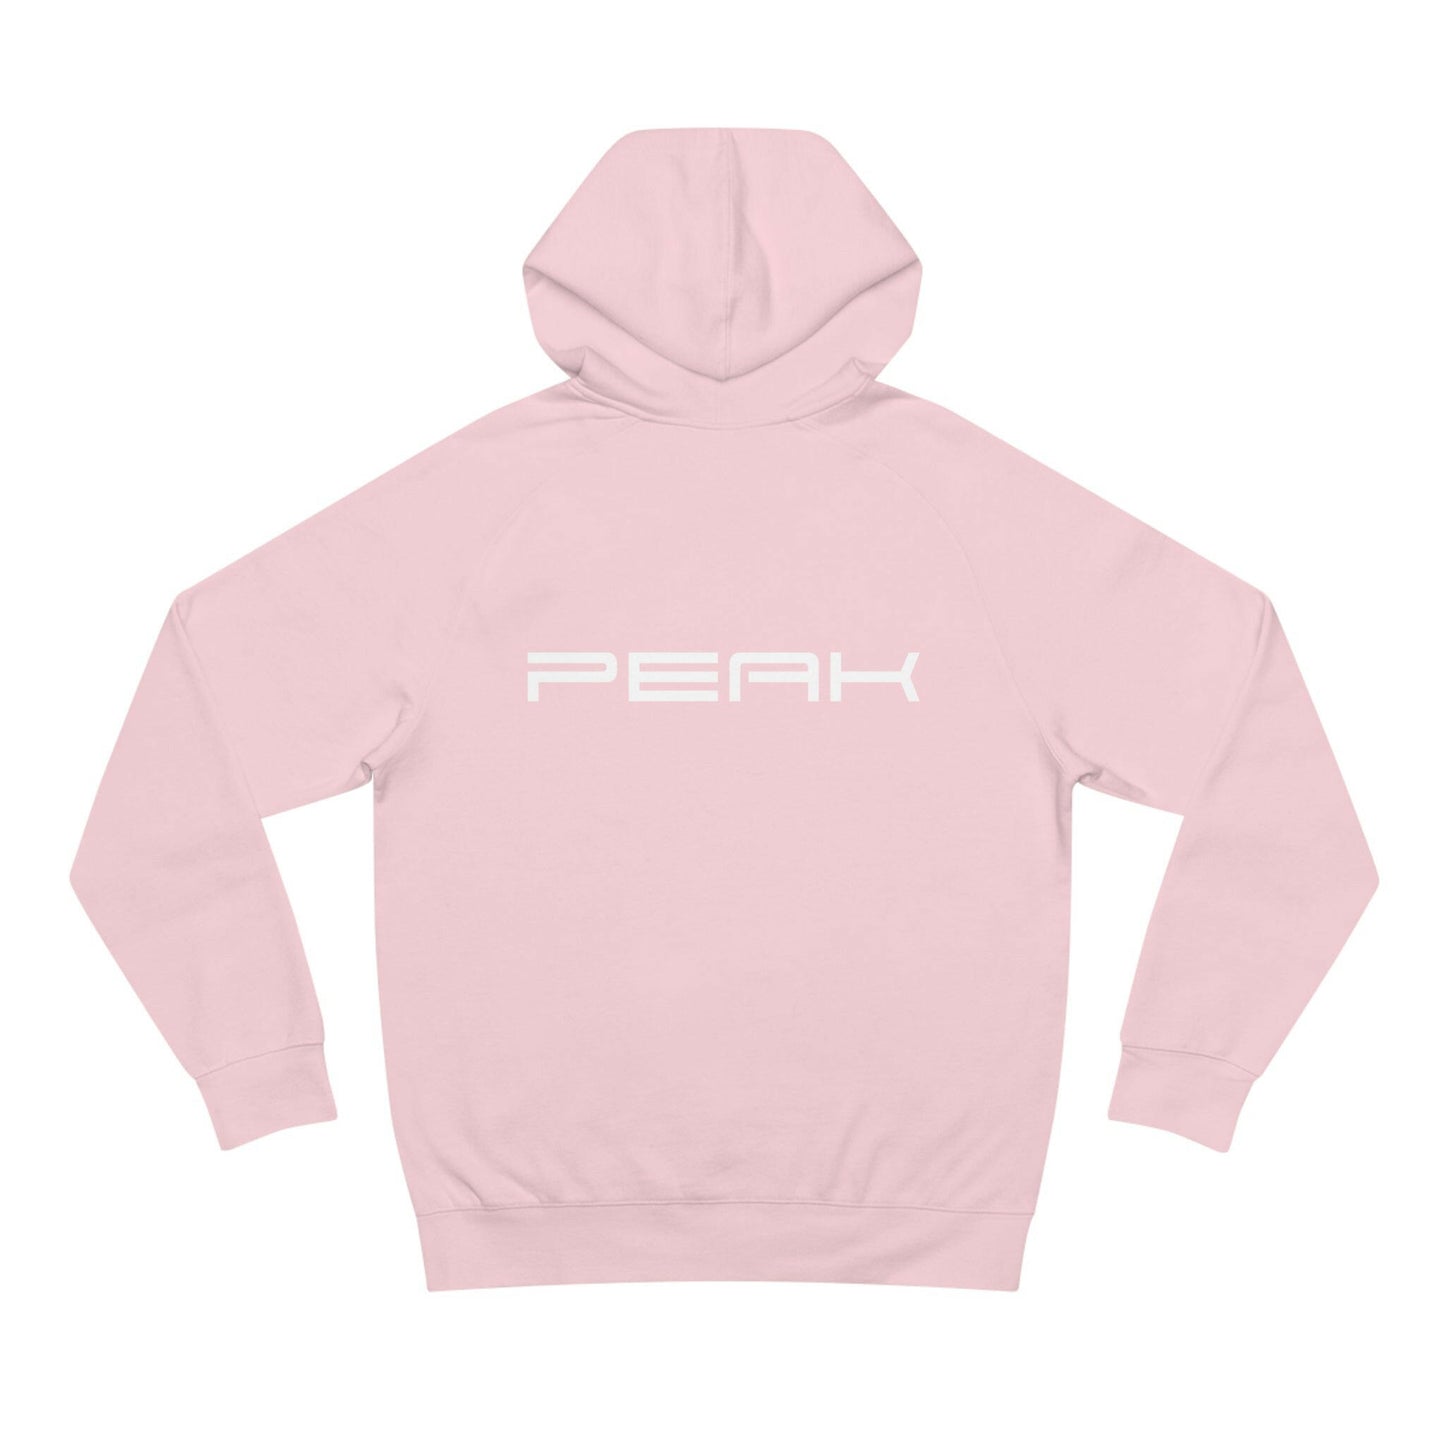 PEAK Unisex Supply Hoodie 003 (Available in 6 Colors)